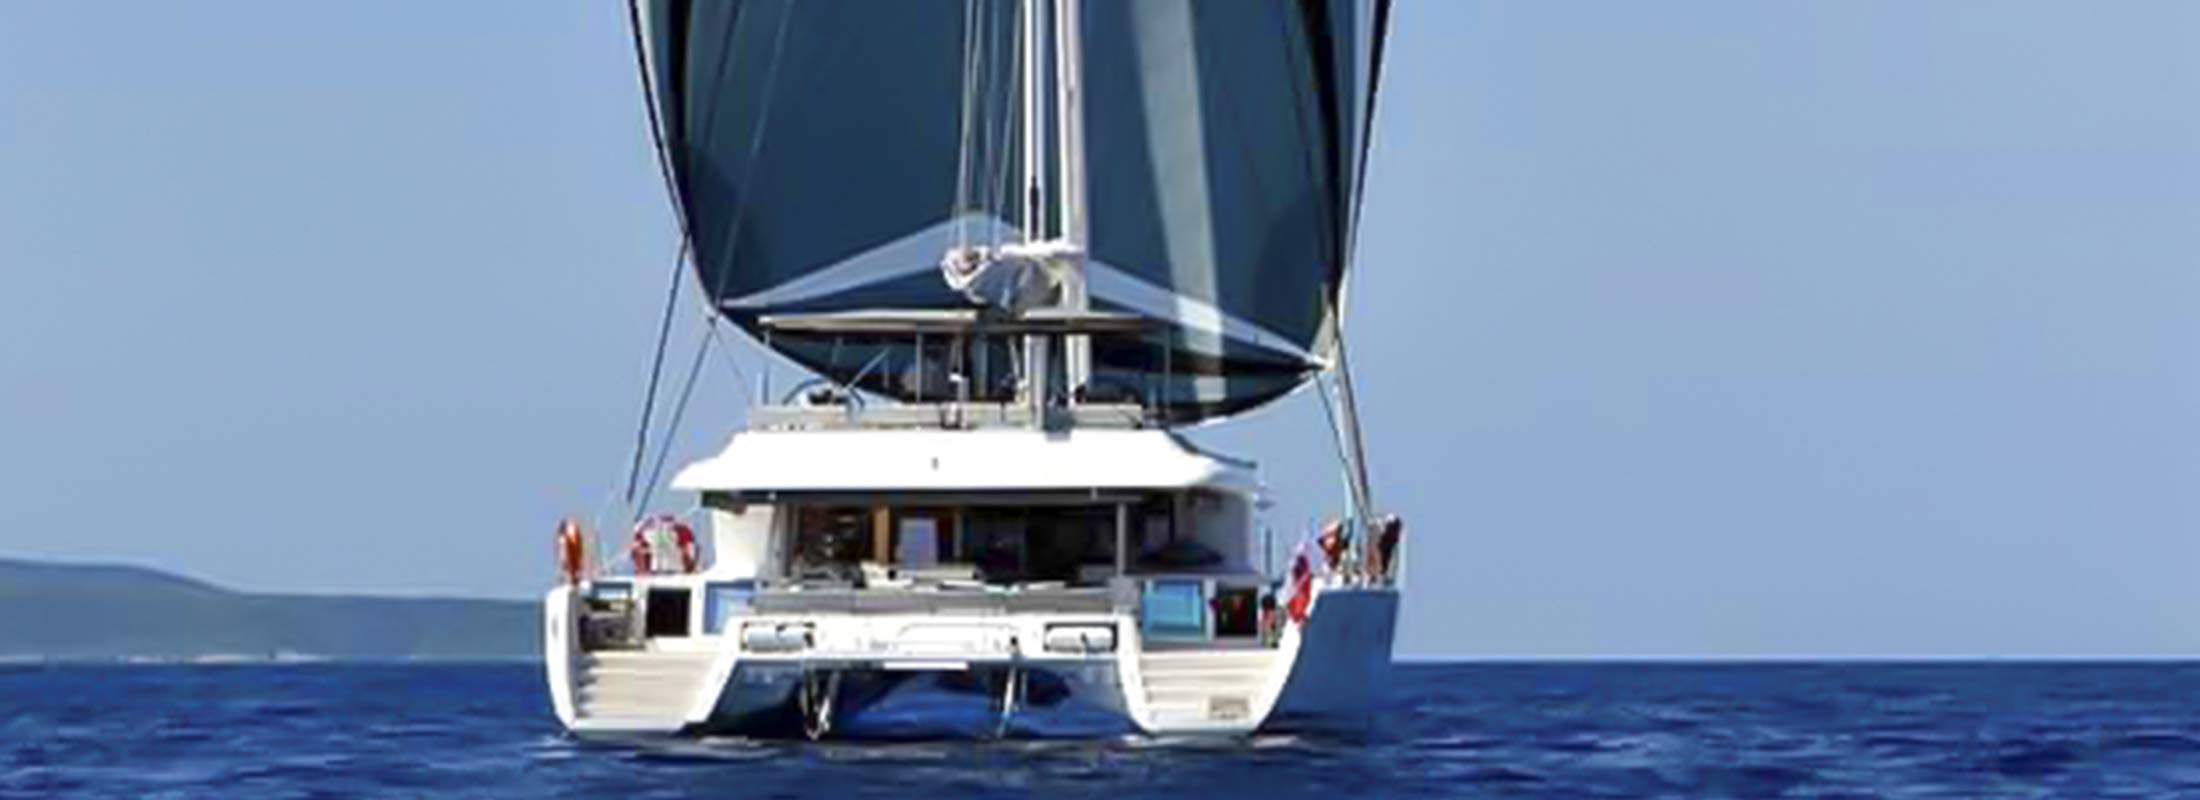 Ocean View Sailing Yacht for Charter Mediterranean Leeward Islands slider 2